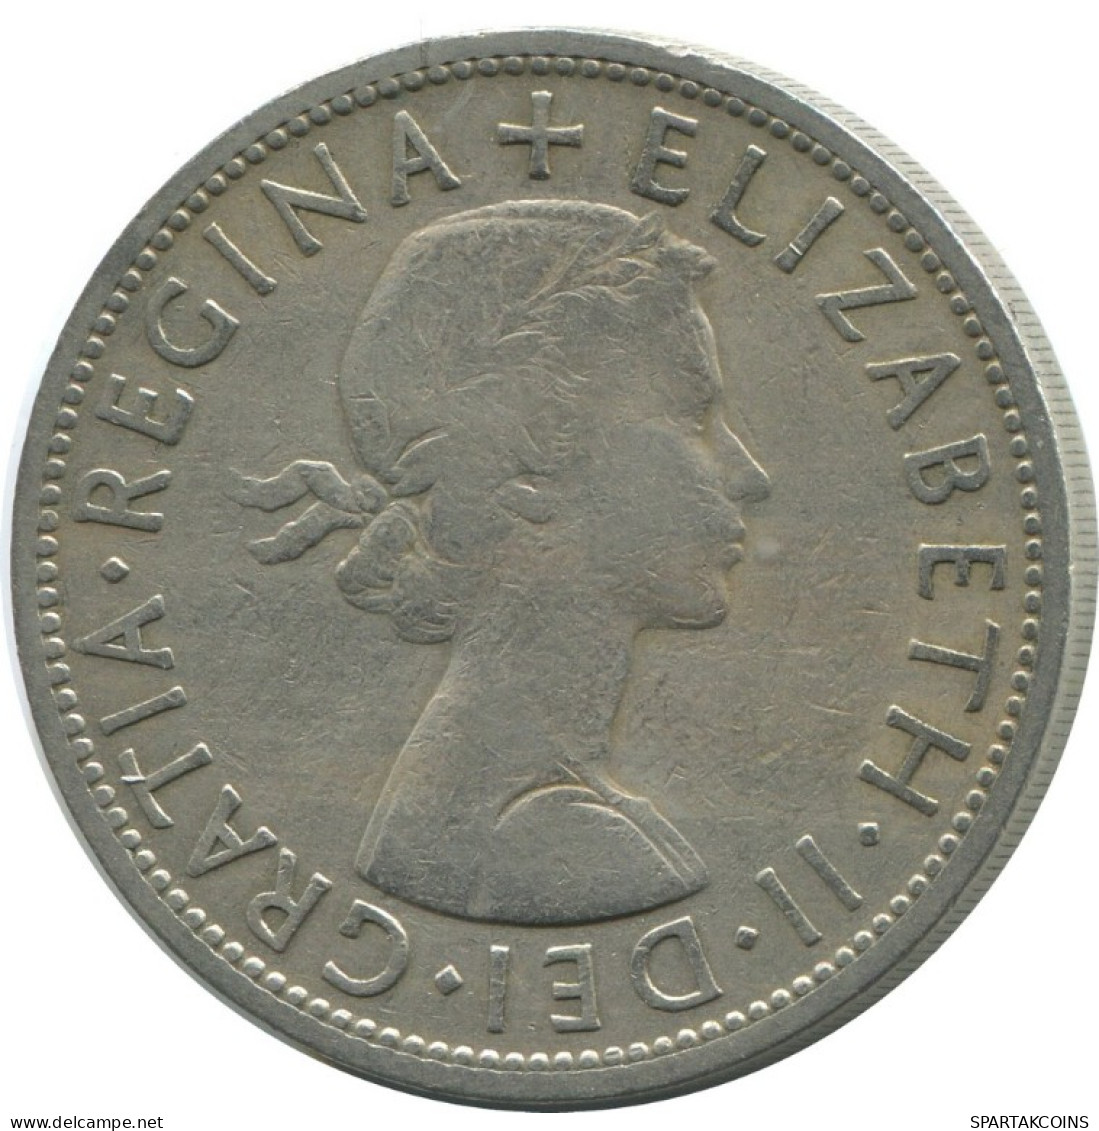 HALF CROWN 1956 UK GROßBRITANNIEN GREAT BRITAIN Münze #AH015.1.D.A - K. 1/2 Crown